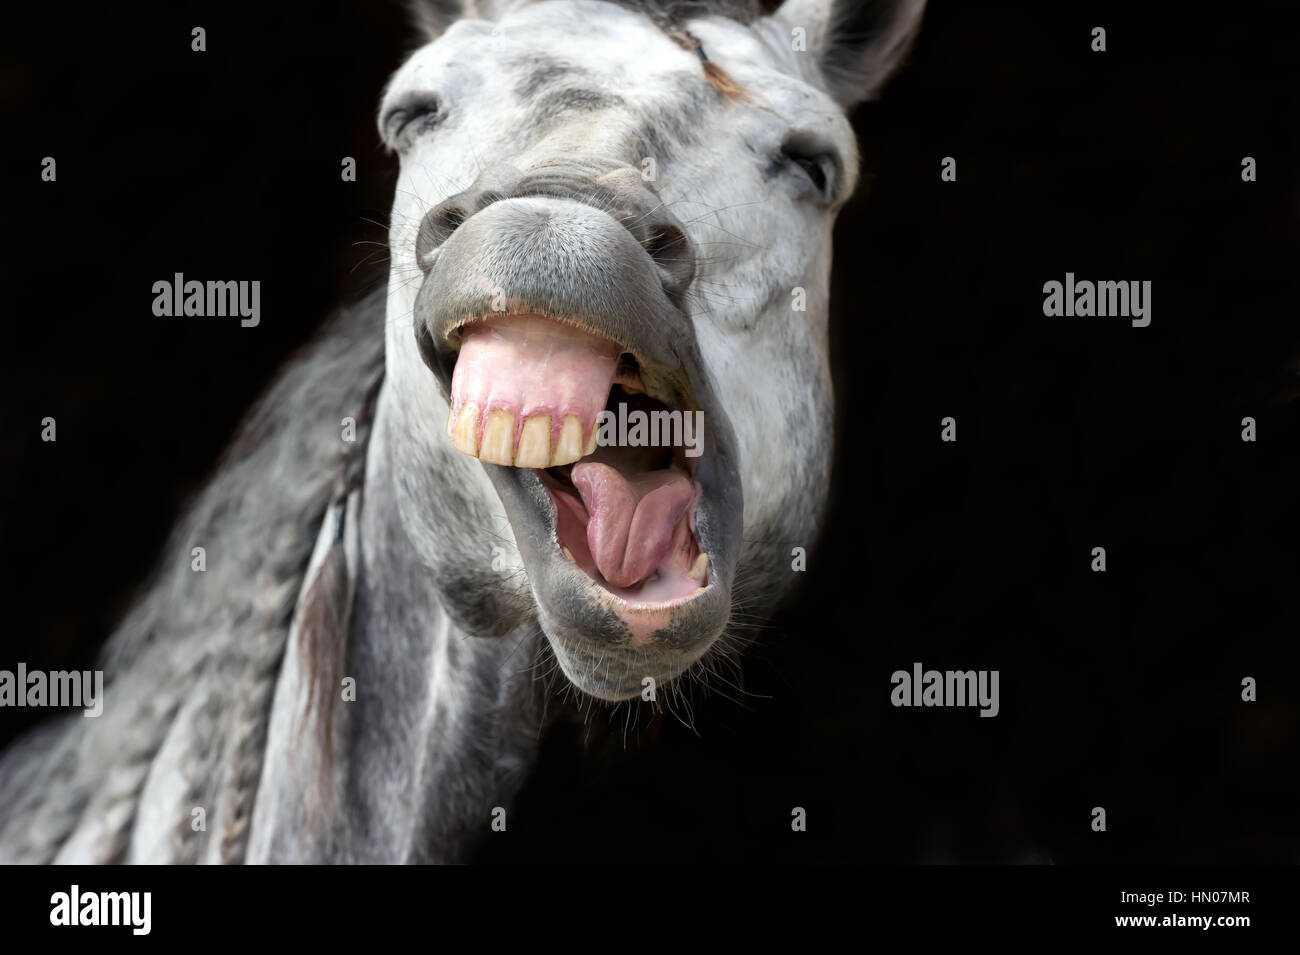 Funny animal es un caballo blanco riendo su funny face off. Foto de stock